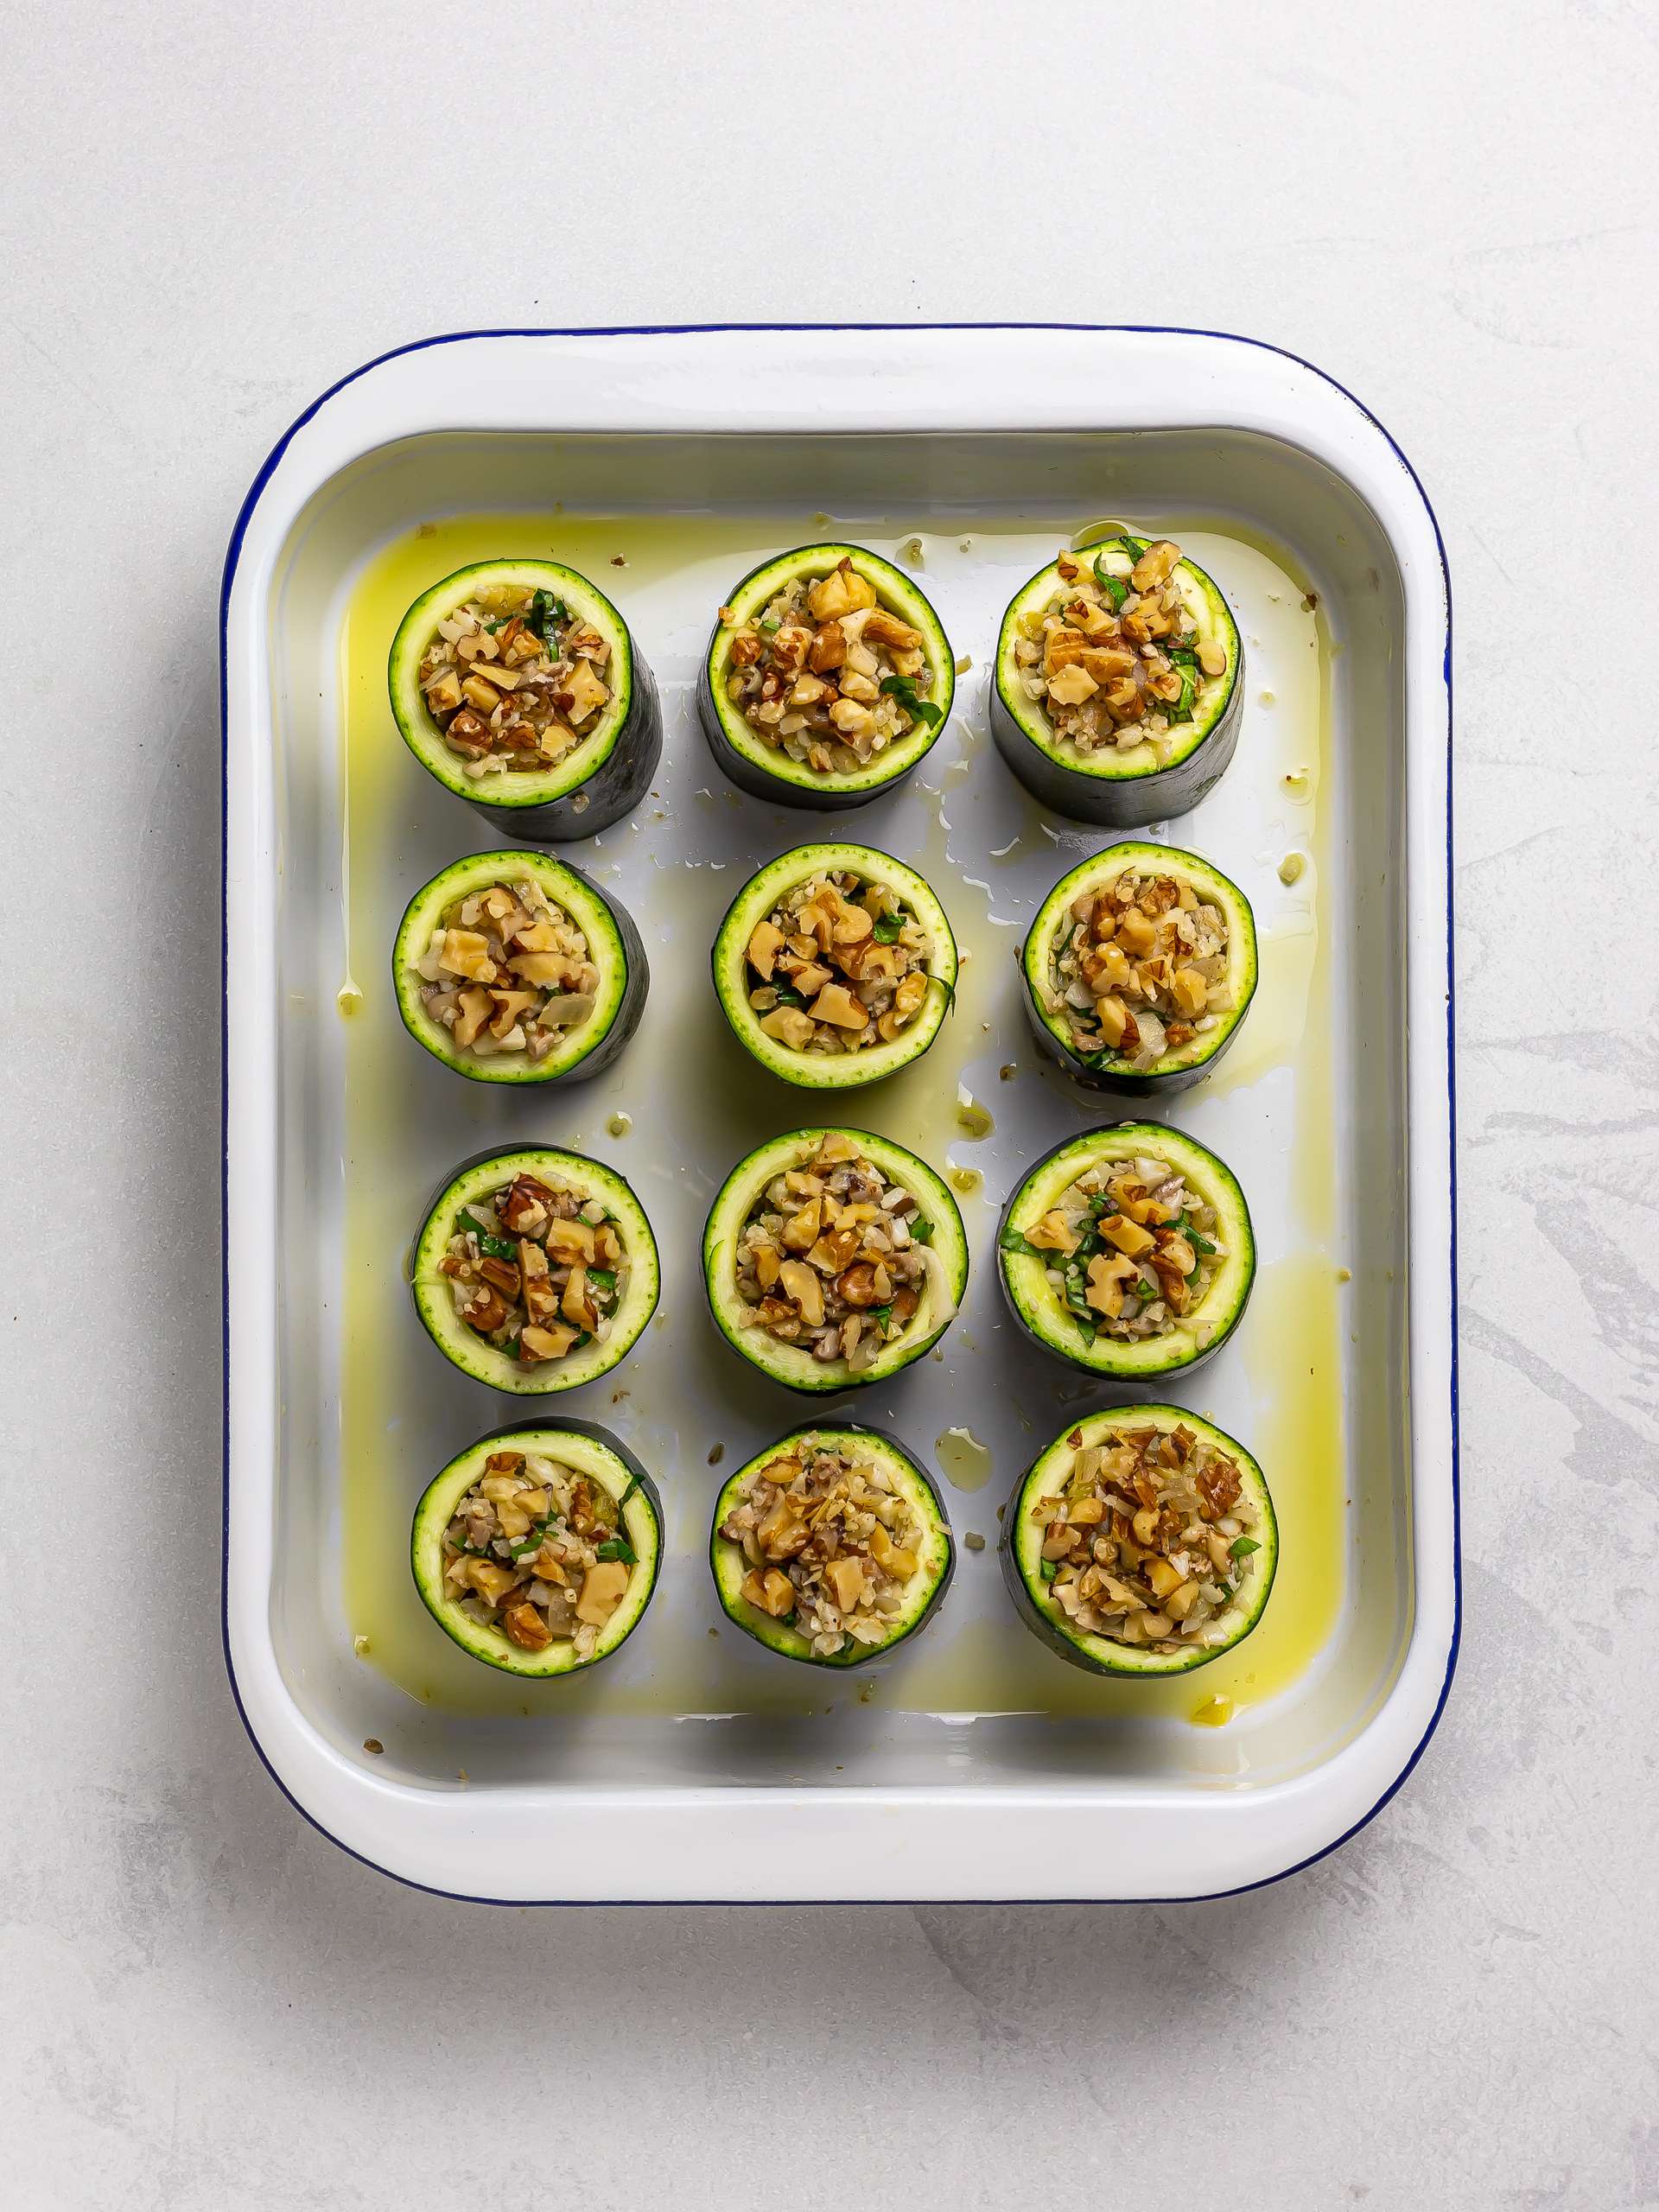 stuffed zucchini cups in a baking tray